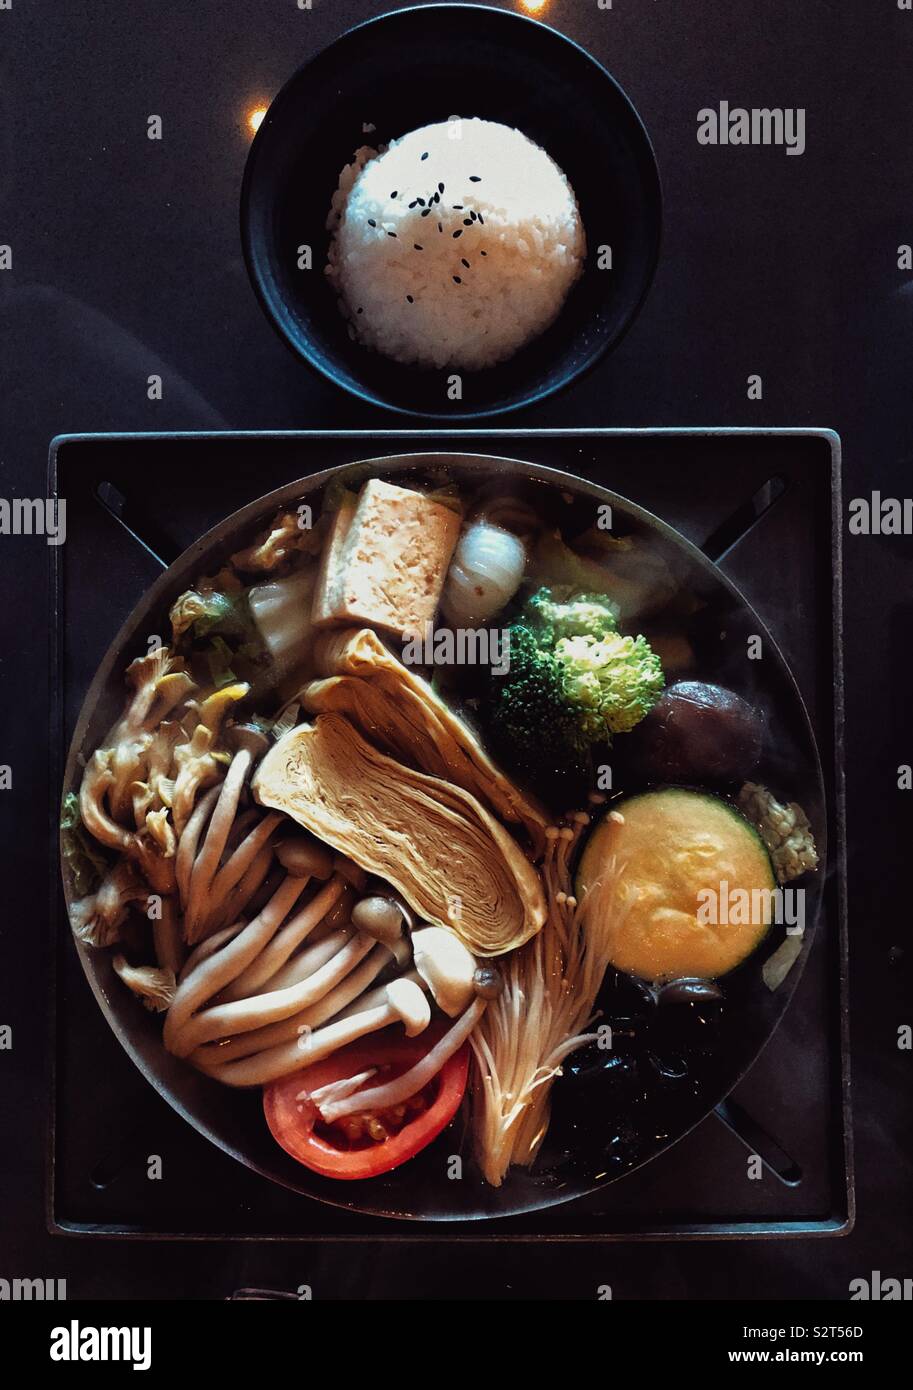 https://c8.alamy.com/comp/S2T56D/vegan-mushroom-hot-pot-and-rice-in-modern-korean-restaurant-in-seattle-S2T56D.jpg